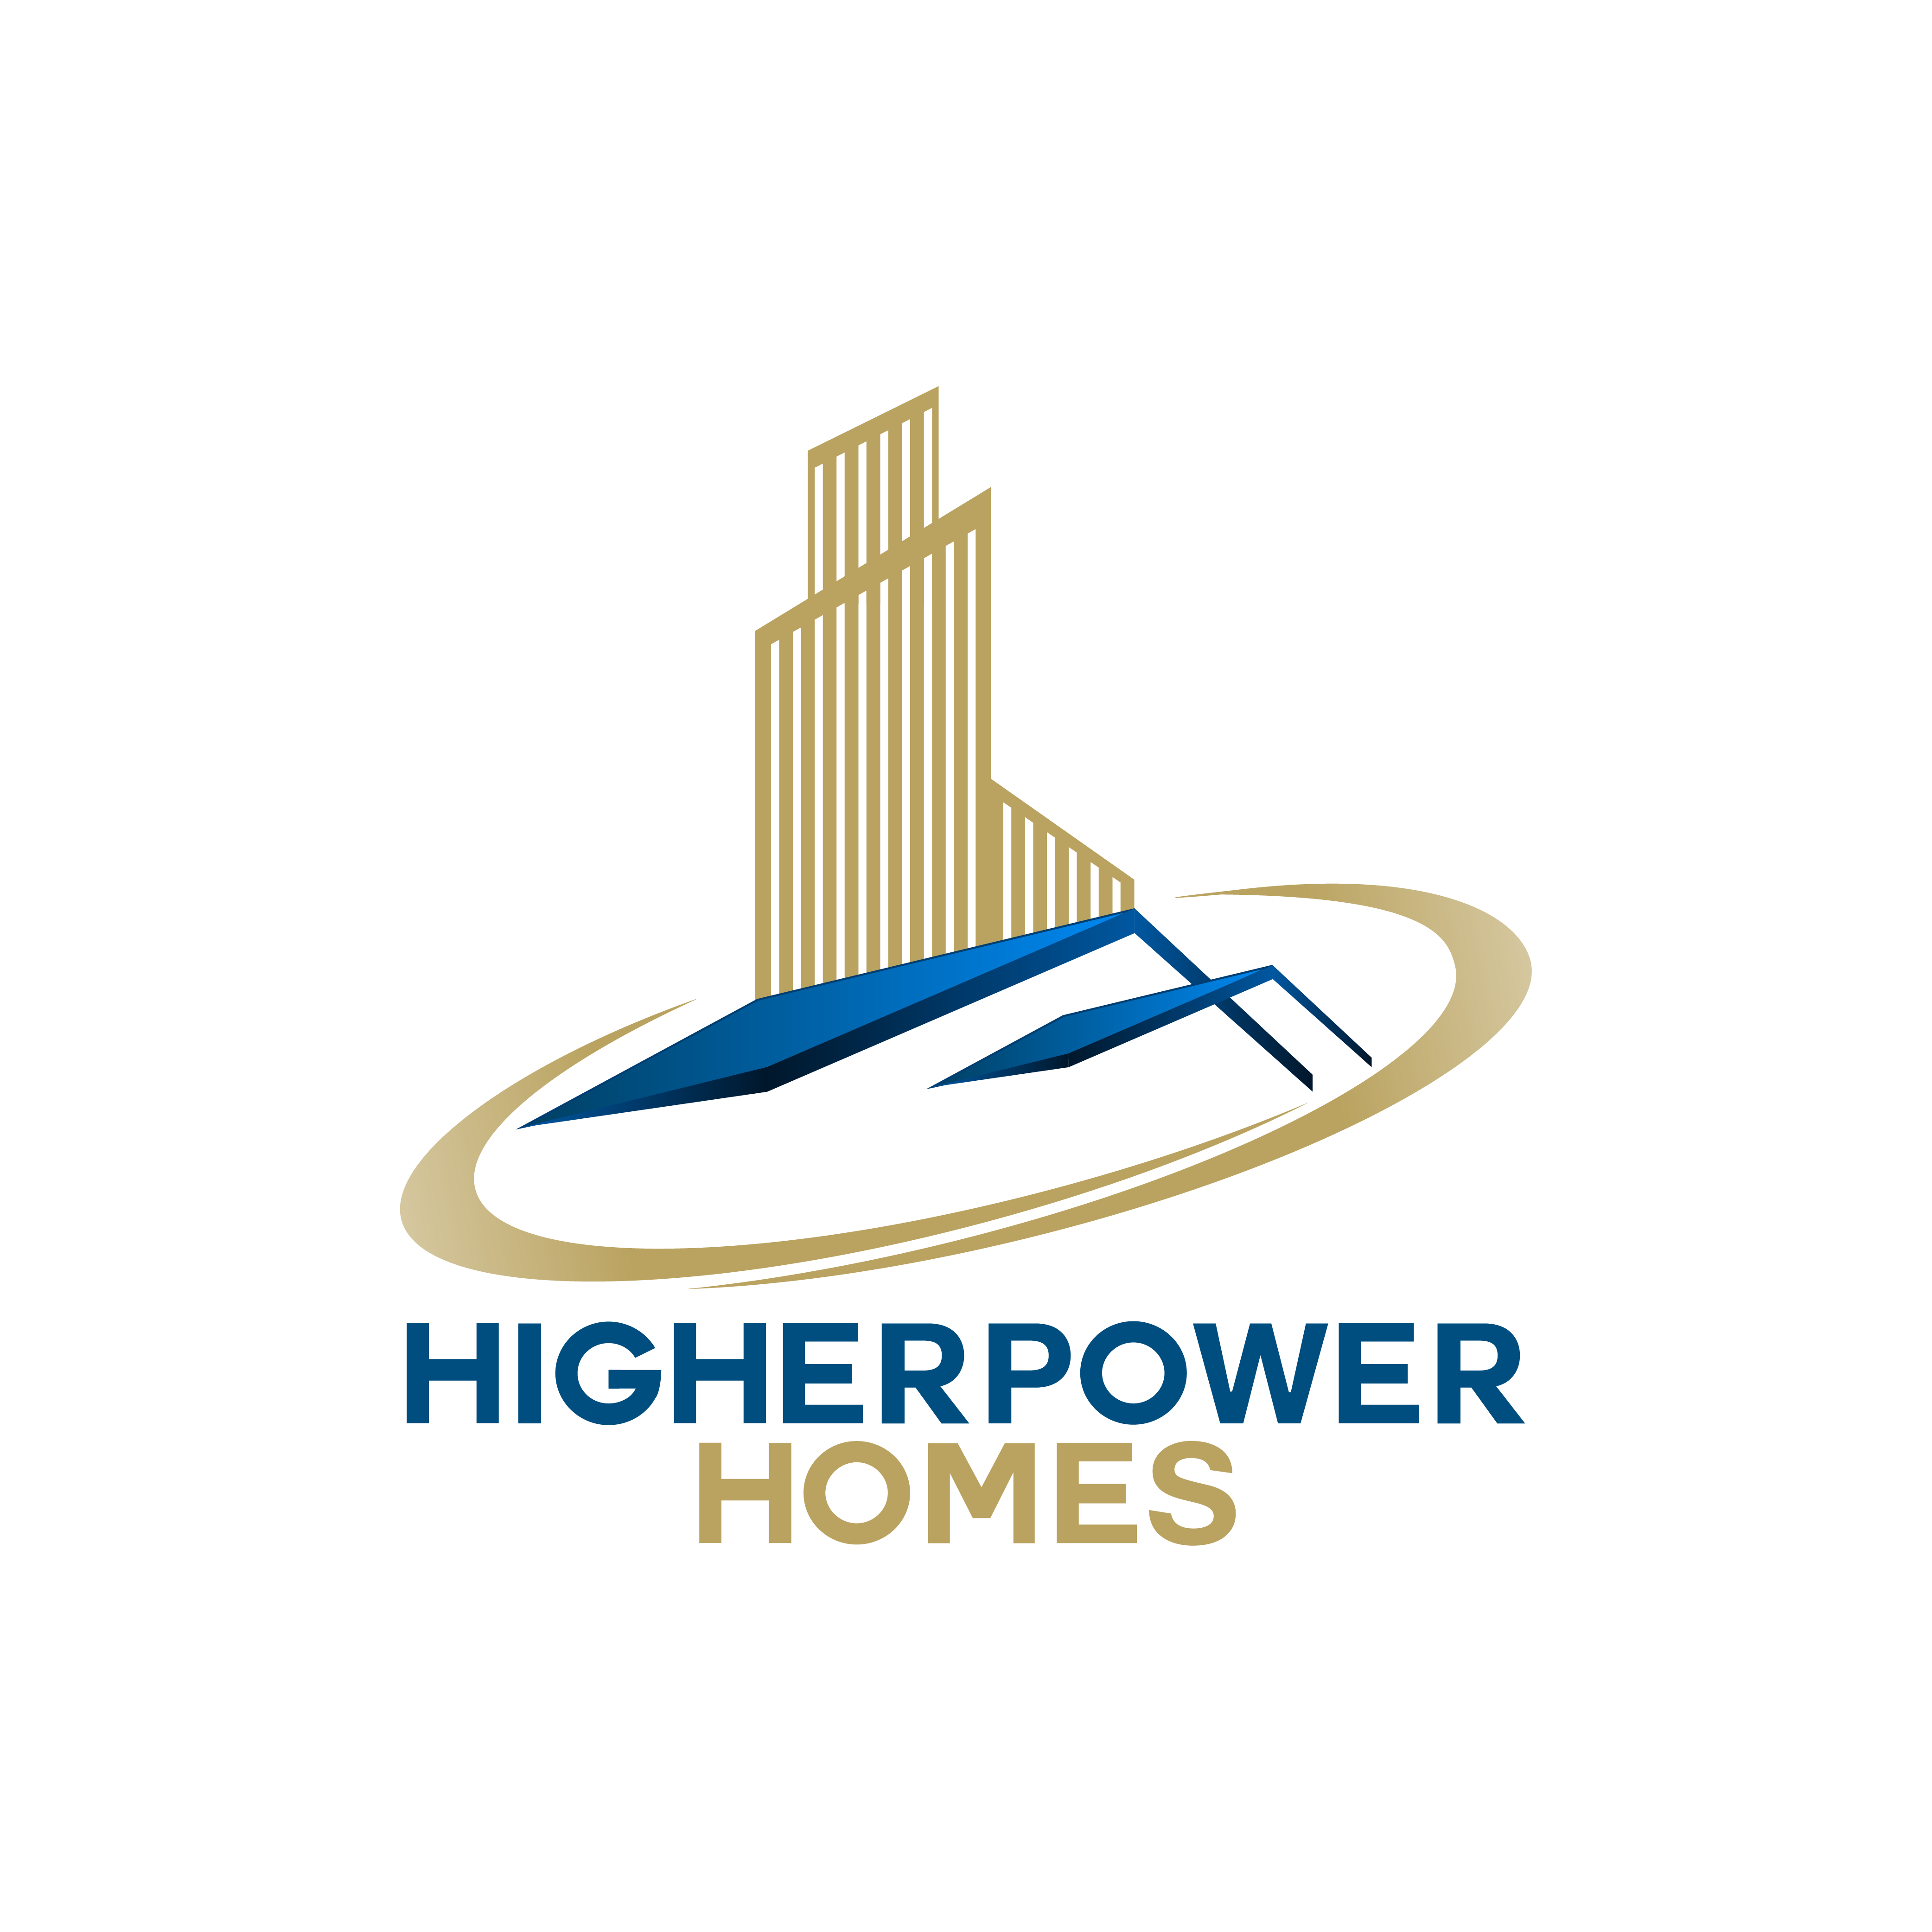 Higher Power Homes – Higher Power Homes